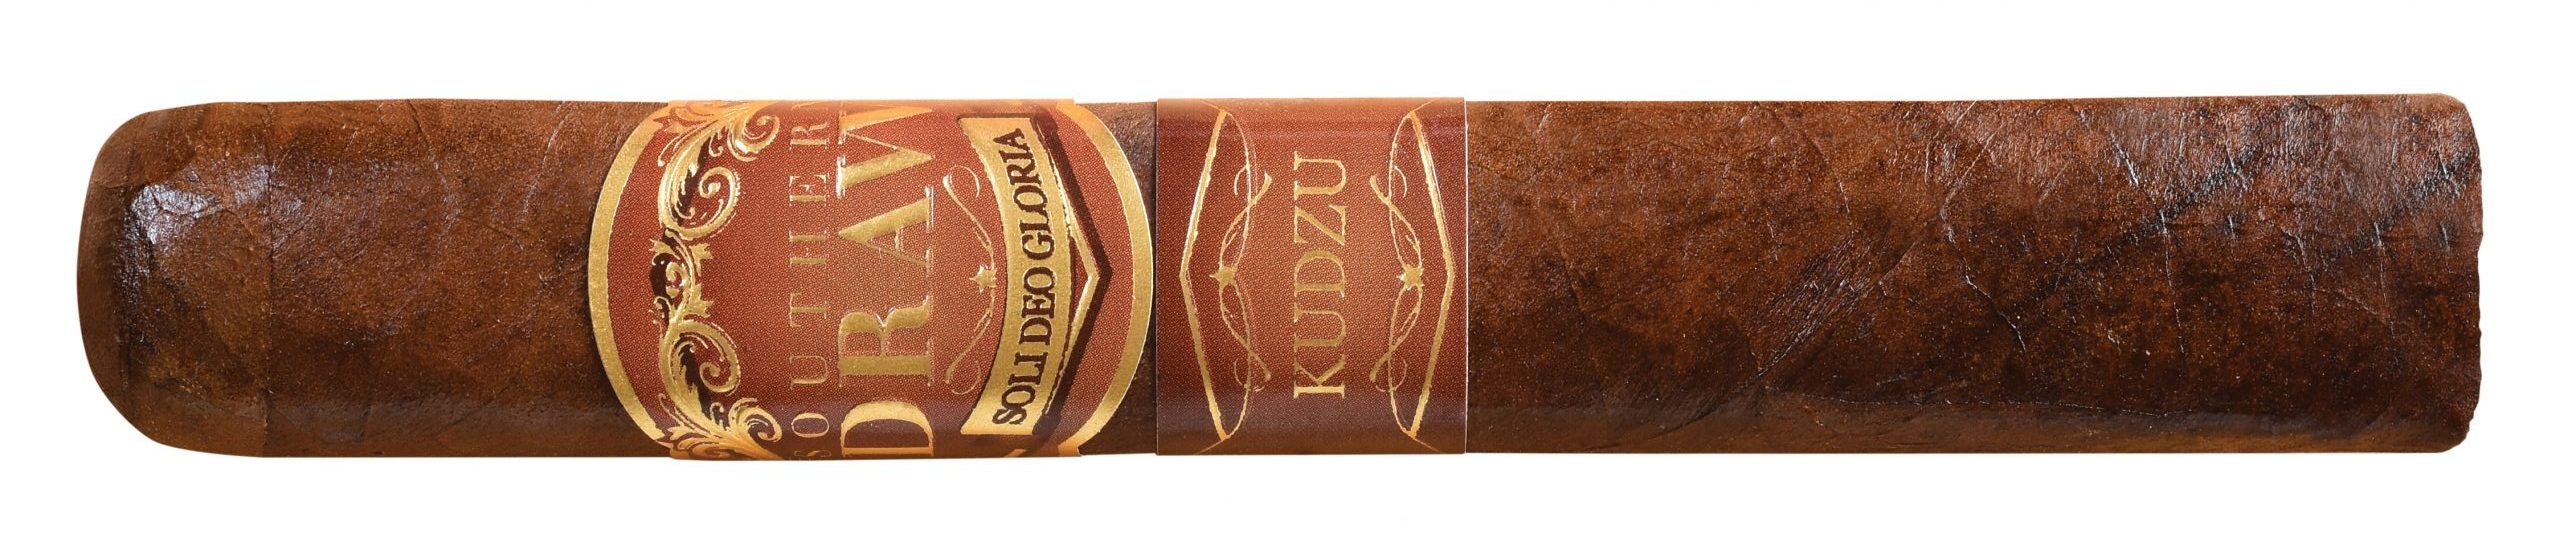 southern draw kudzu robusto single cigar